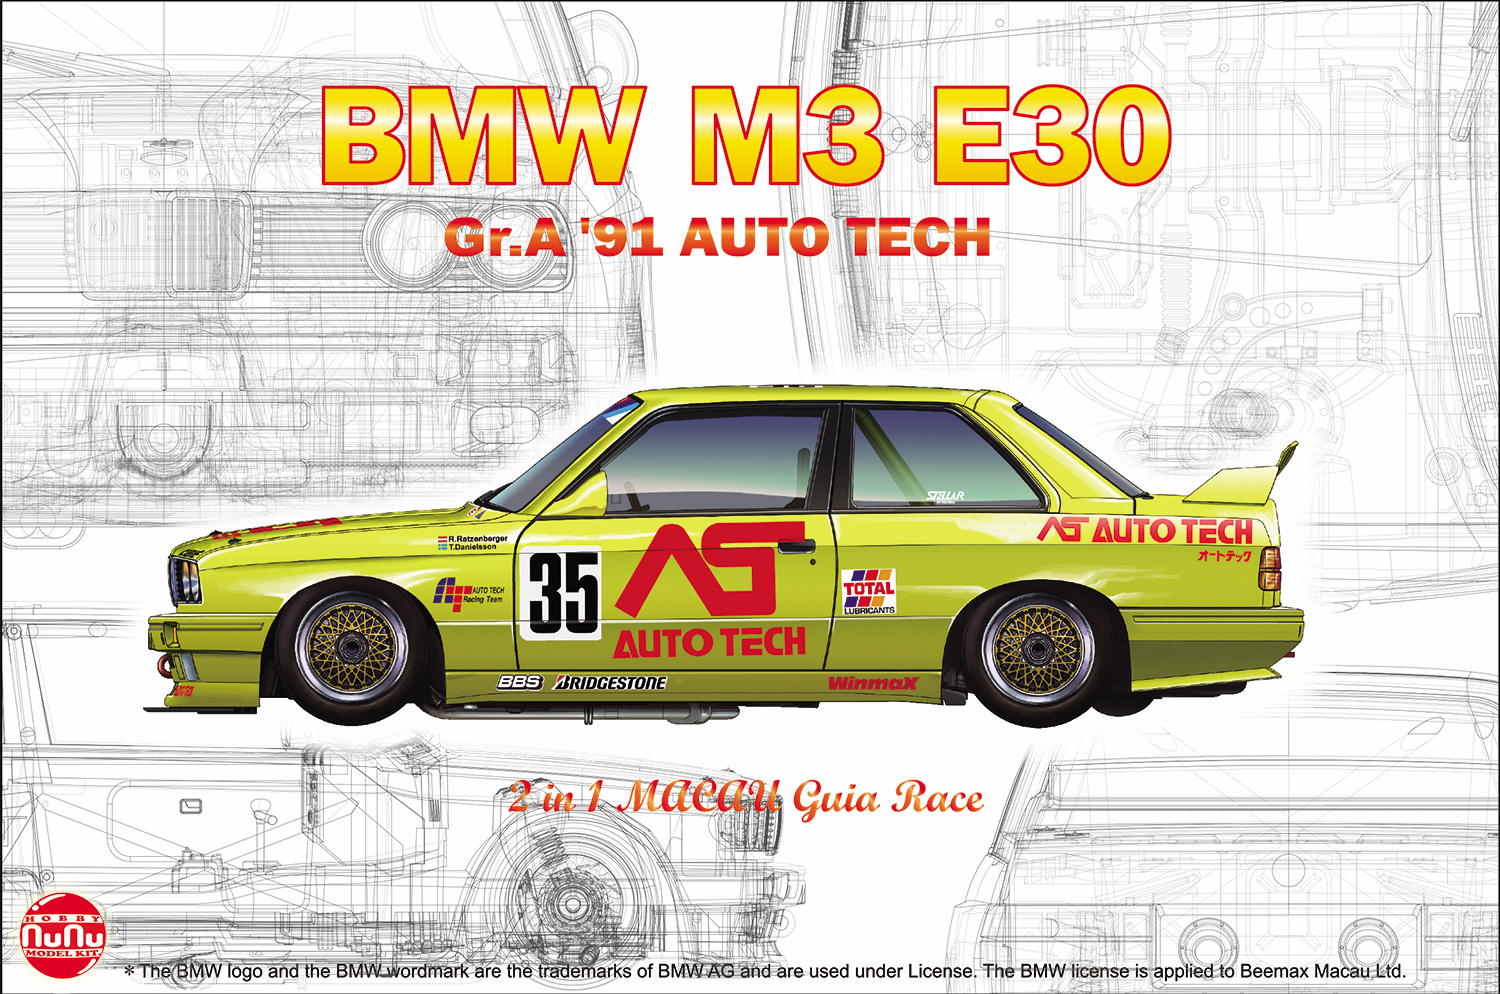 Platz NuNu 1/24: BMW M3 E30 Gr.A 91 Auto Tech 